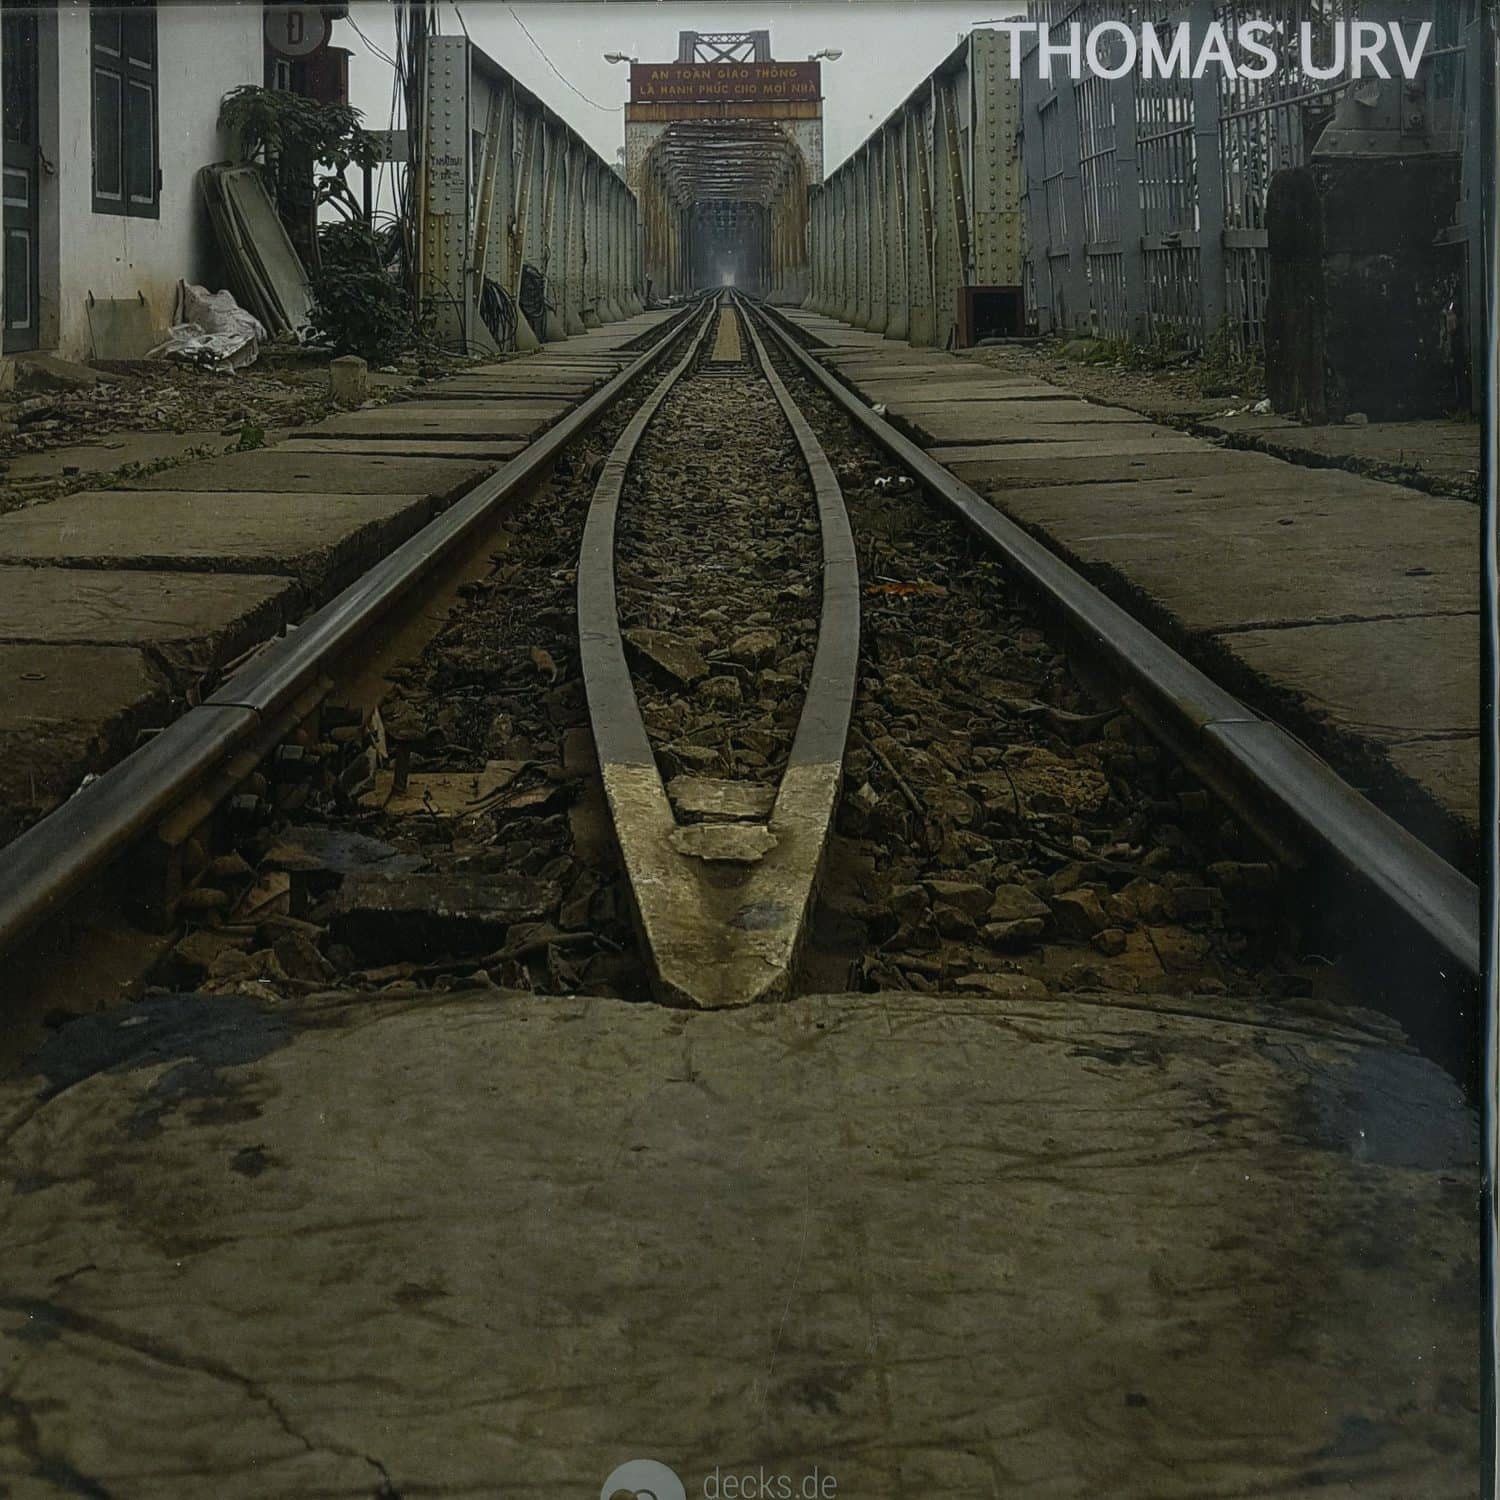 Thomas Urv - KAMBODSJA WORK EP